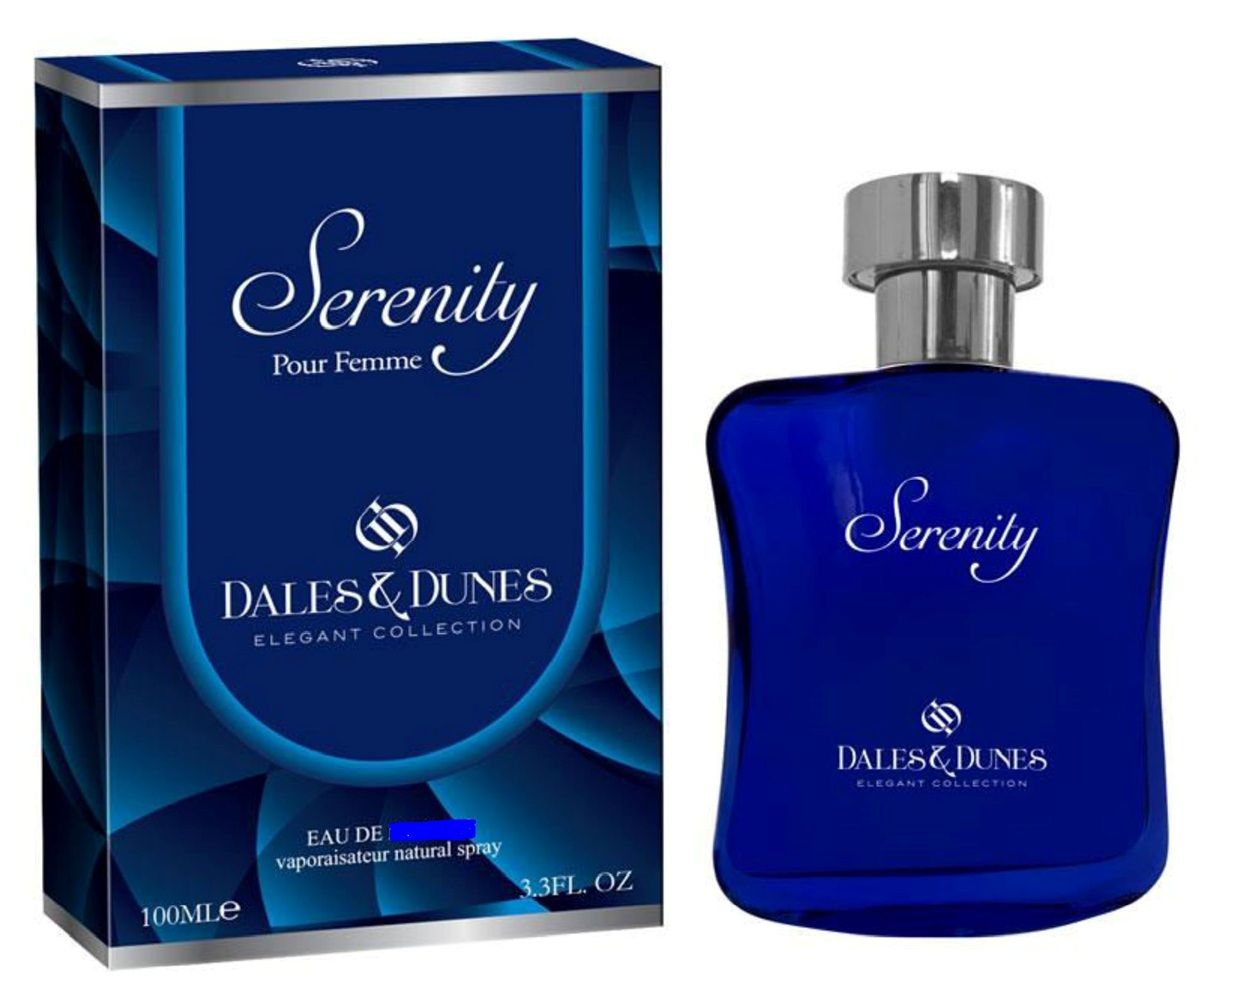 Serenity perfume